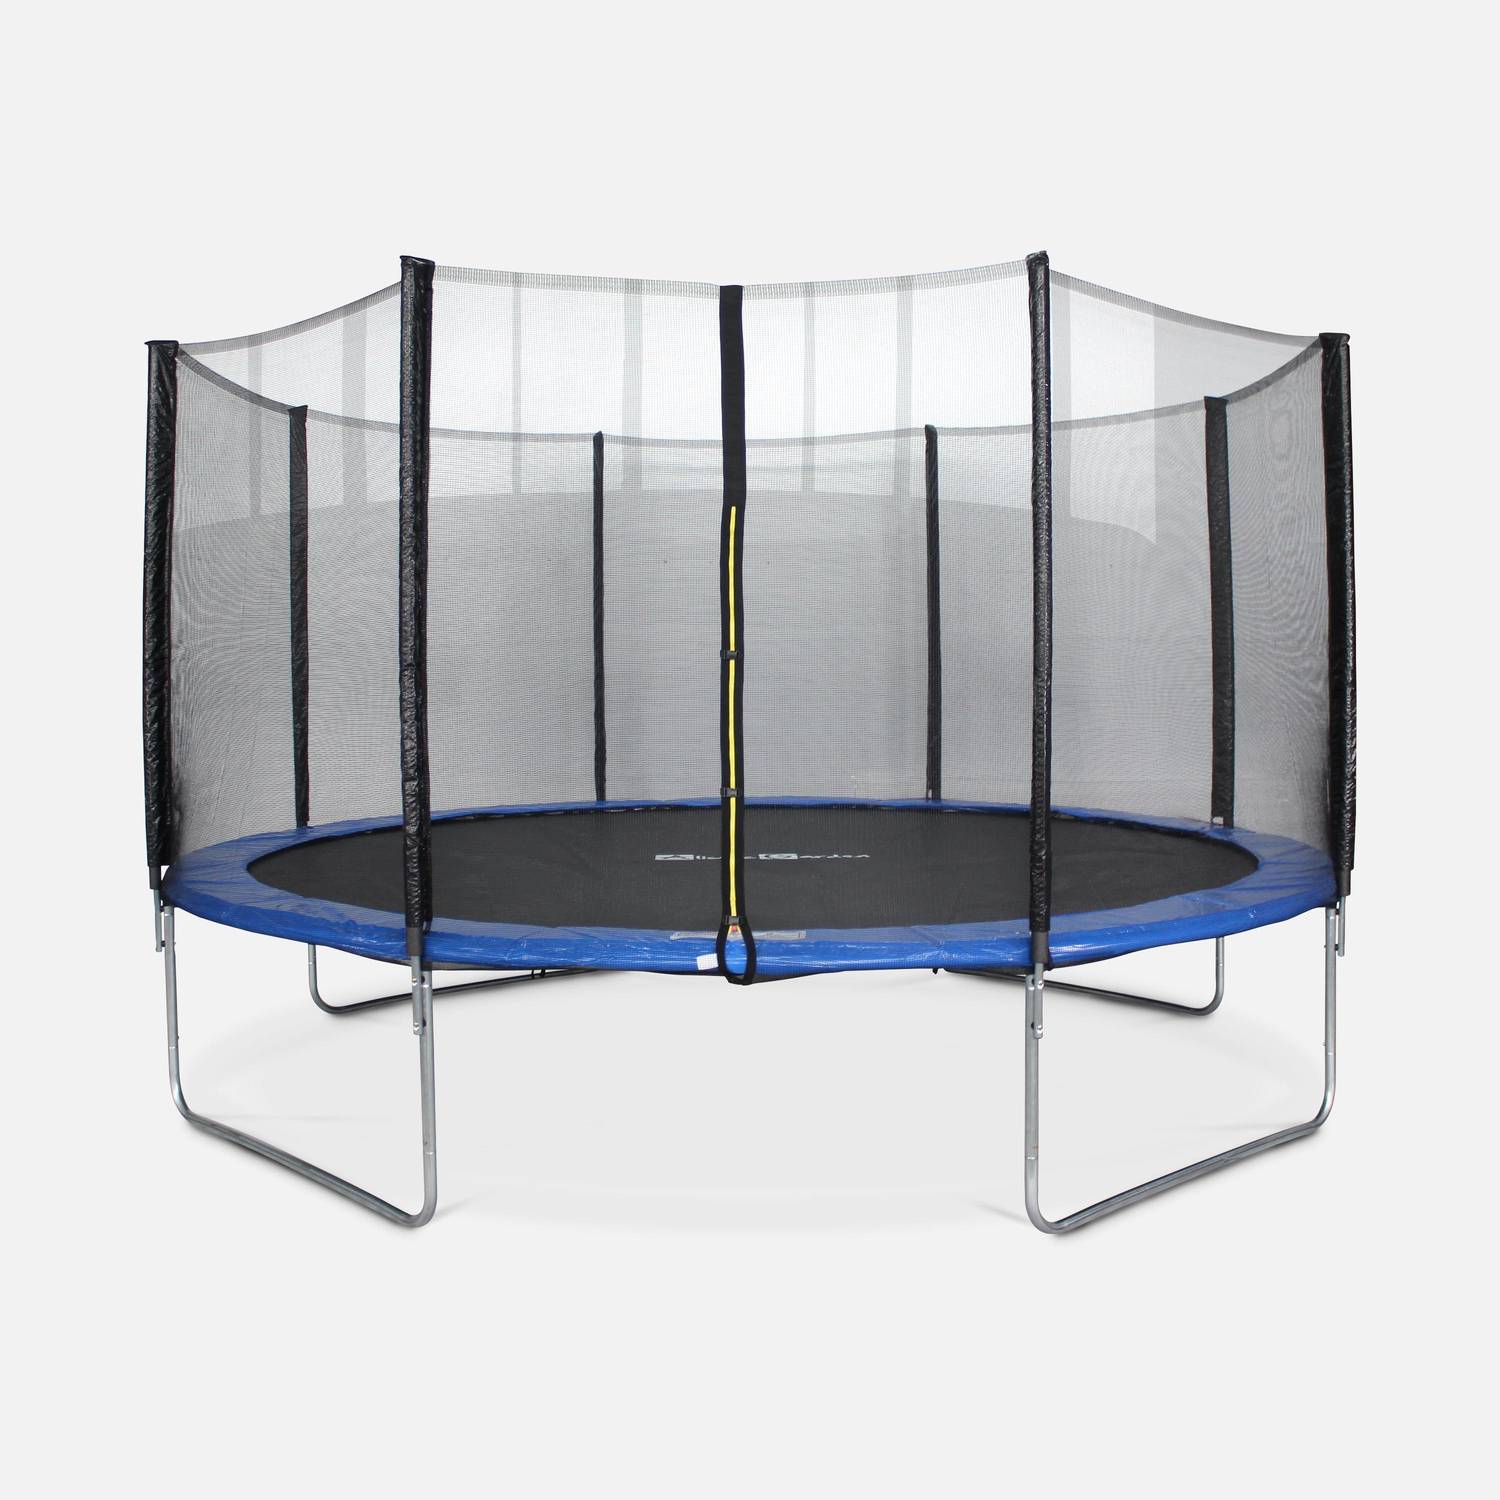 430cm blauwe trampoline met accessoires + kampeertent met draagtas Photo2